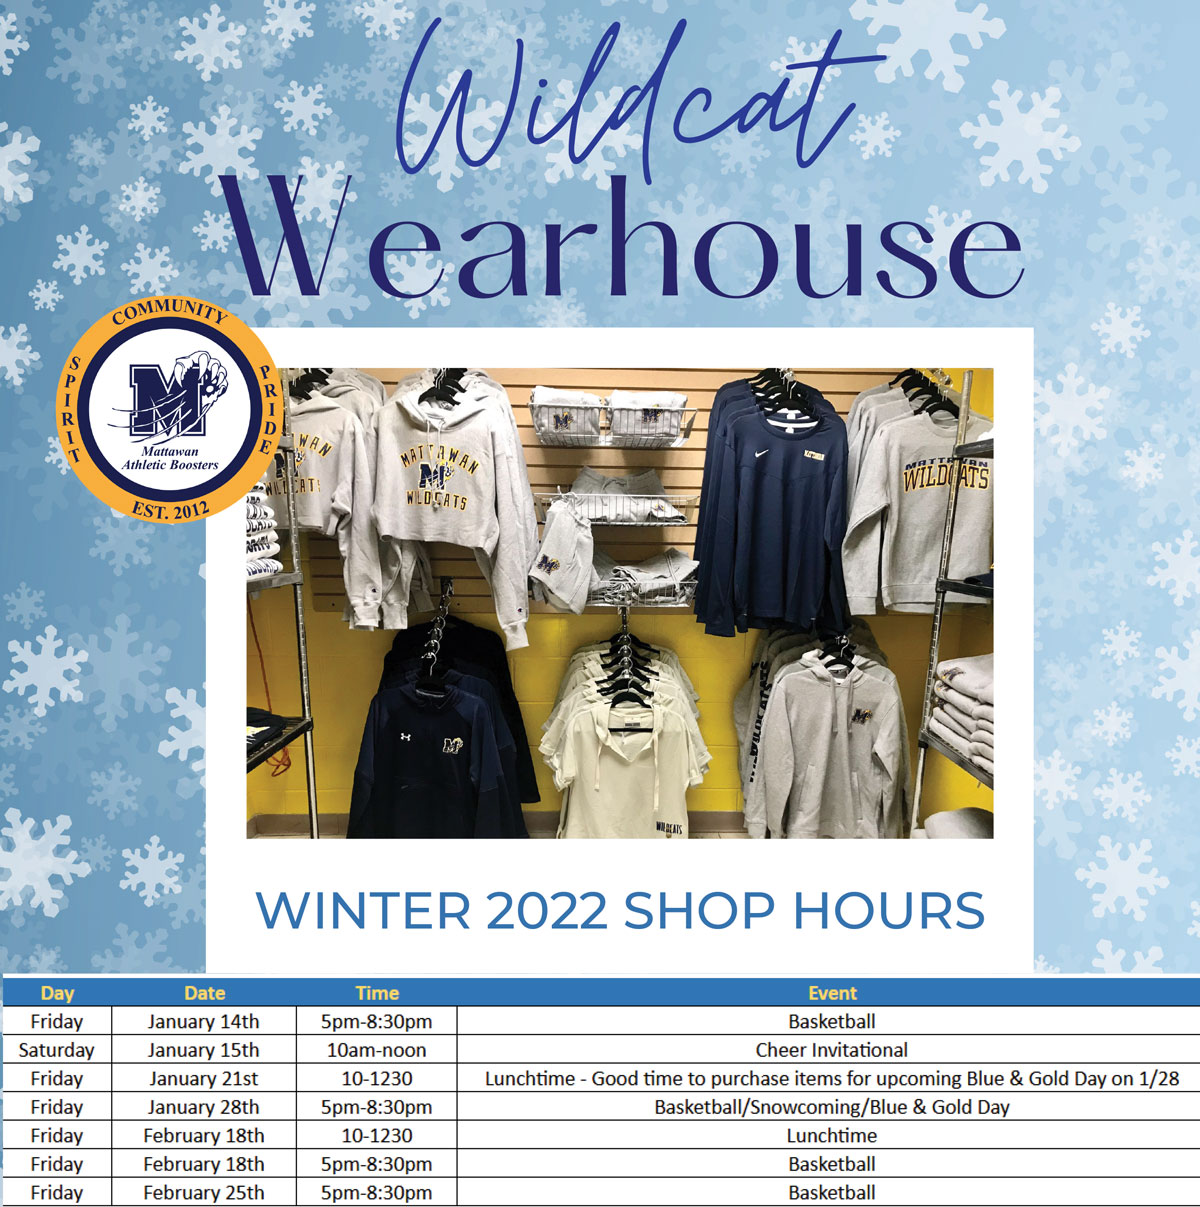 Winter 2022 Shop Hours